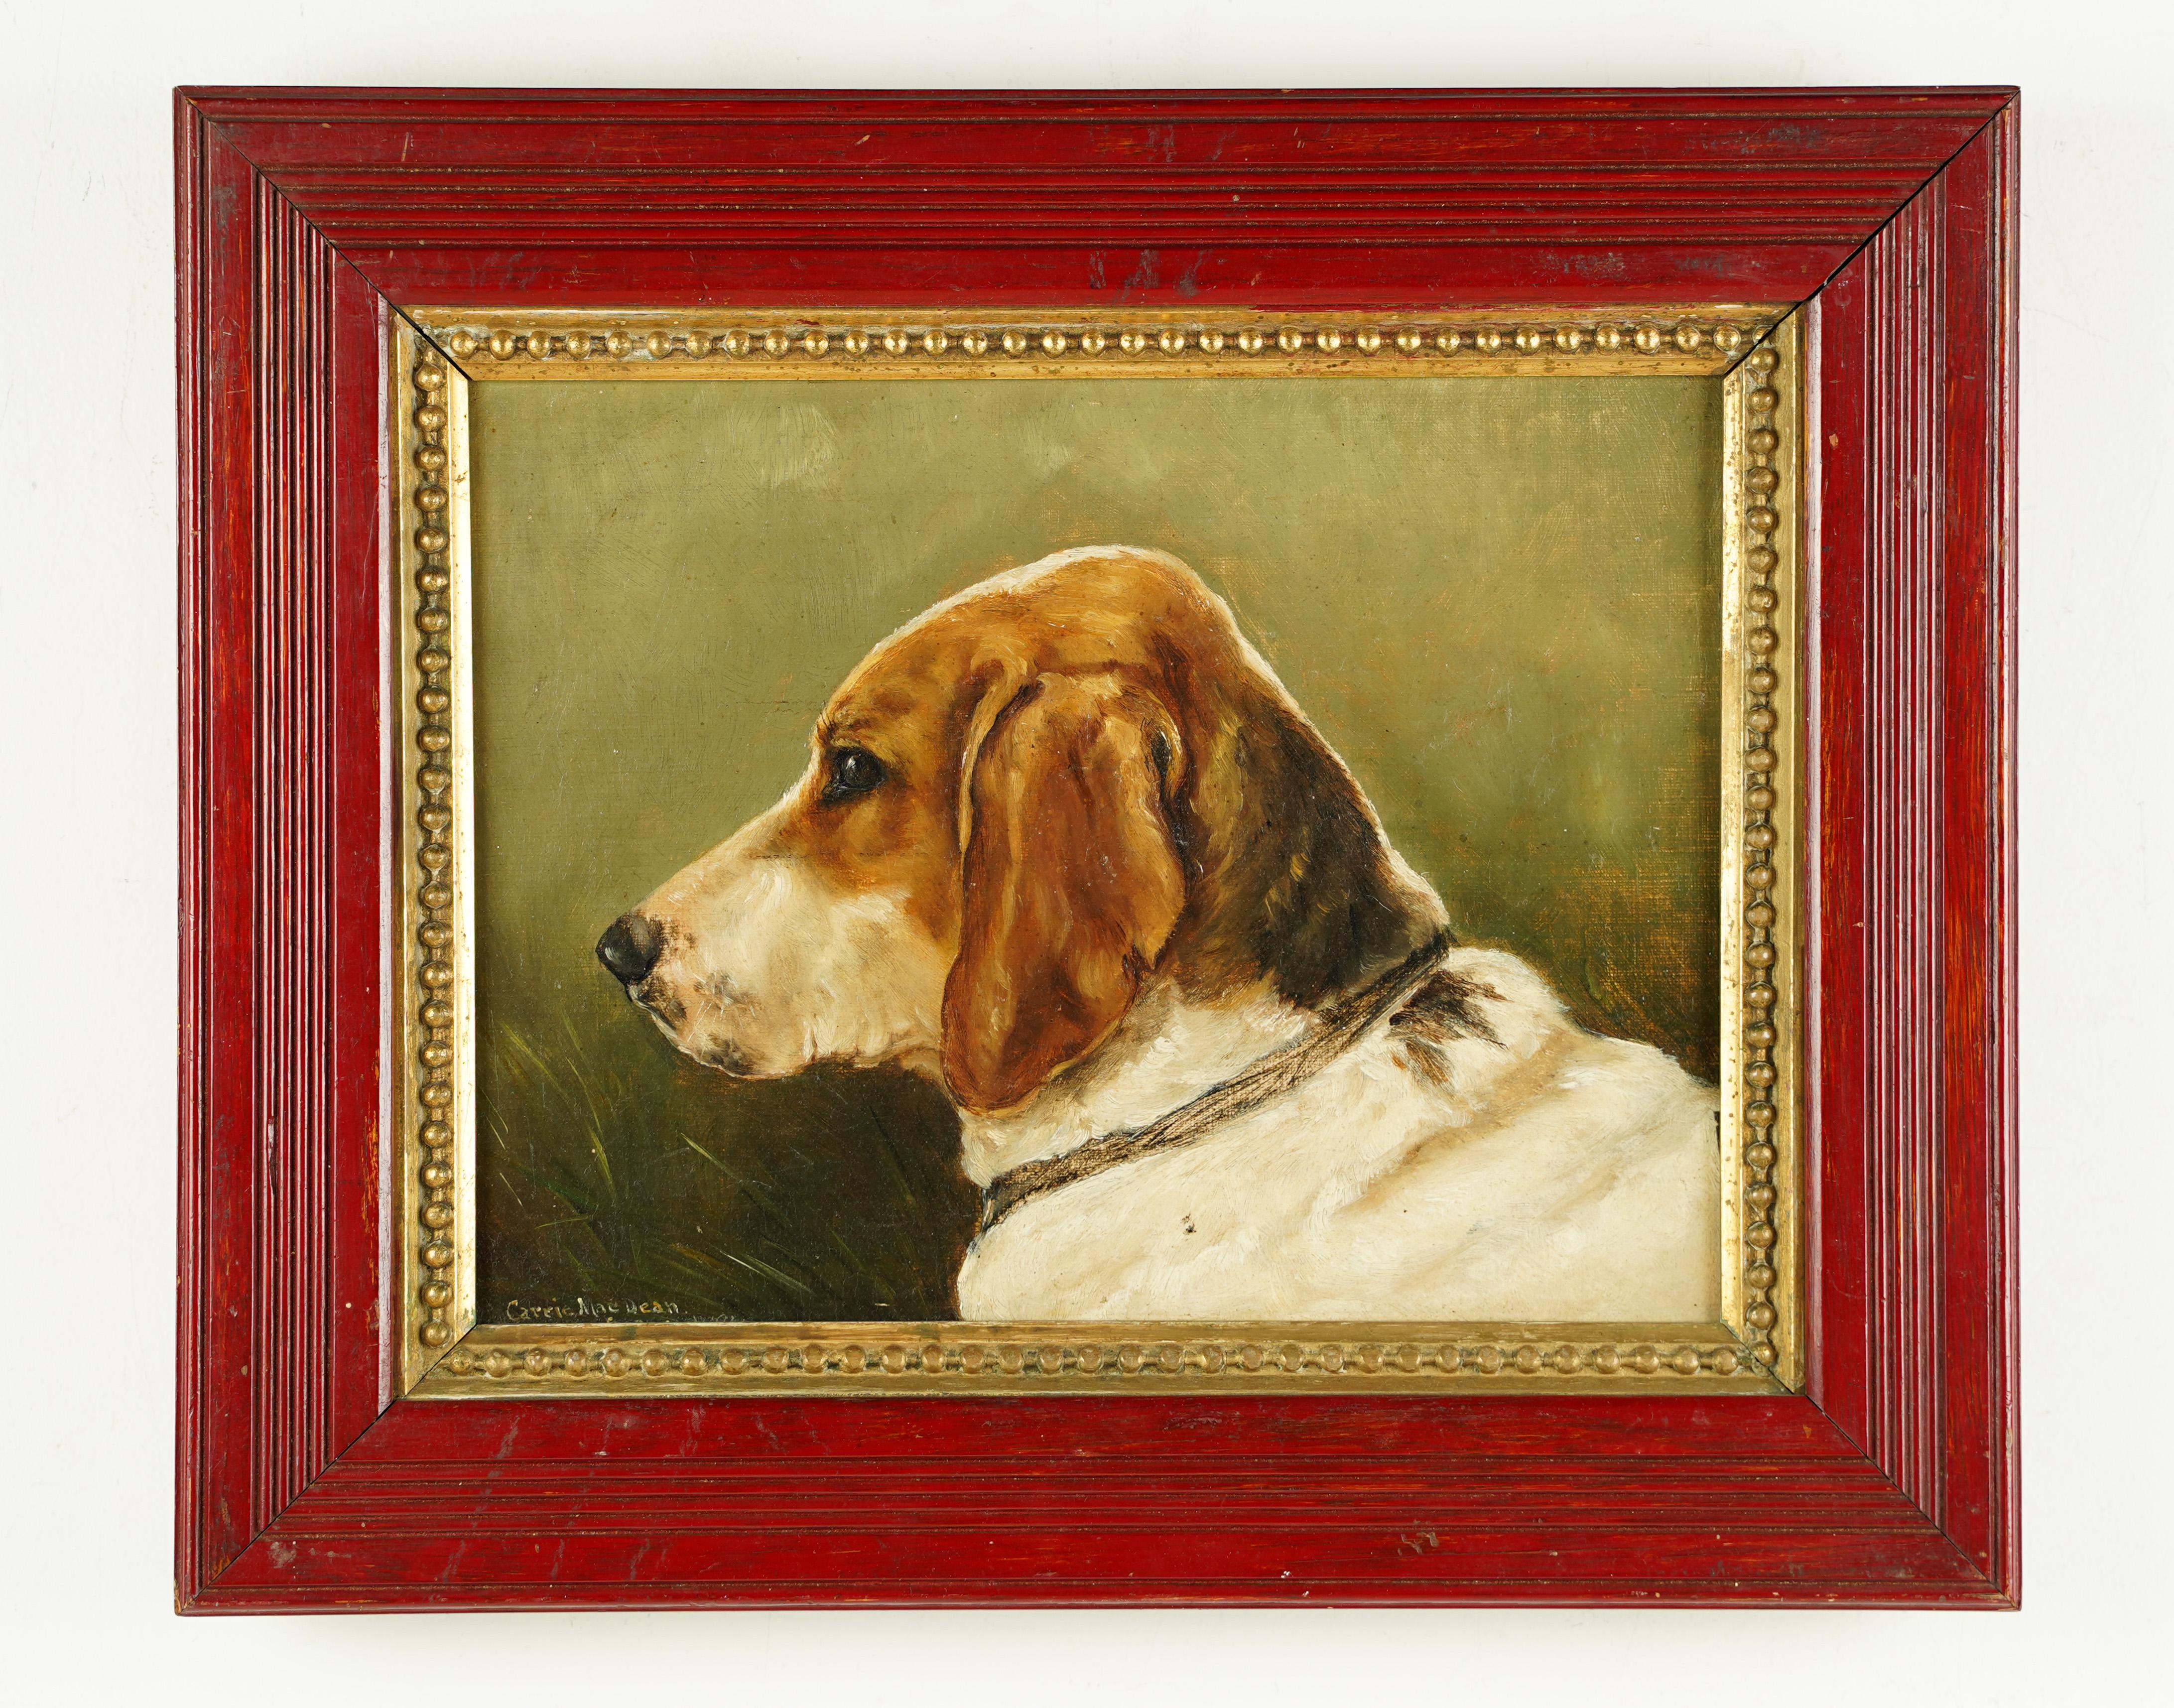  Antique American School Signed Pensive Beagle Dog Animal Portrait Oil Painting 1